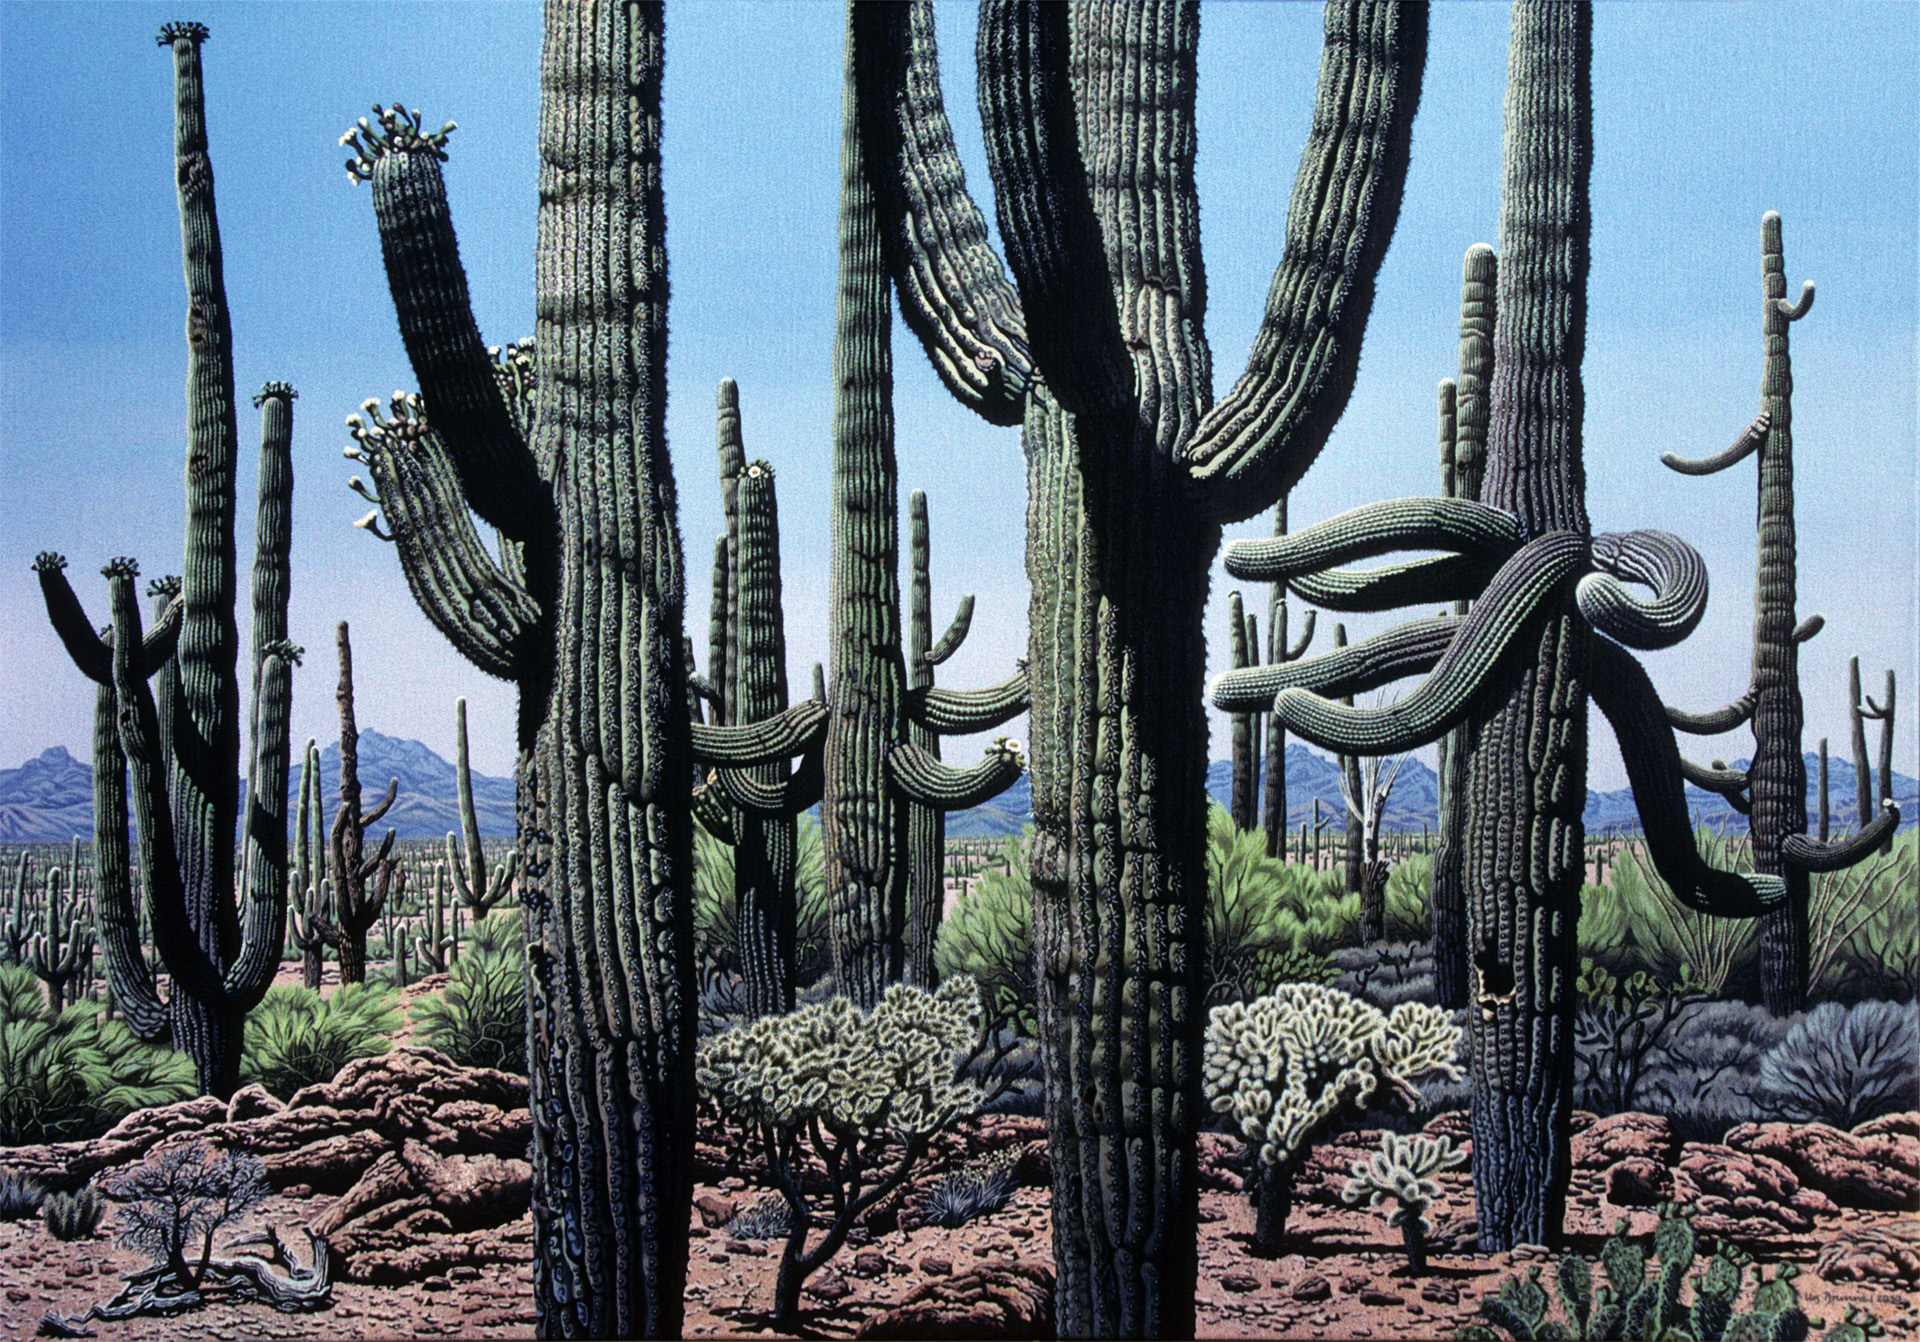 Far West / Arizona-Sonora-Desert, 2010, Acryl auf Leinwand, 70 x 100 cm